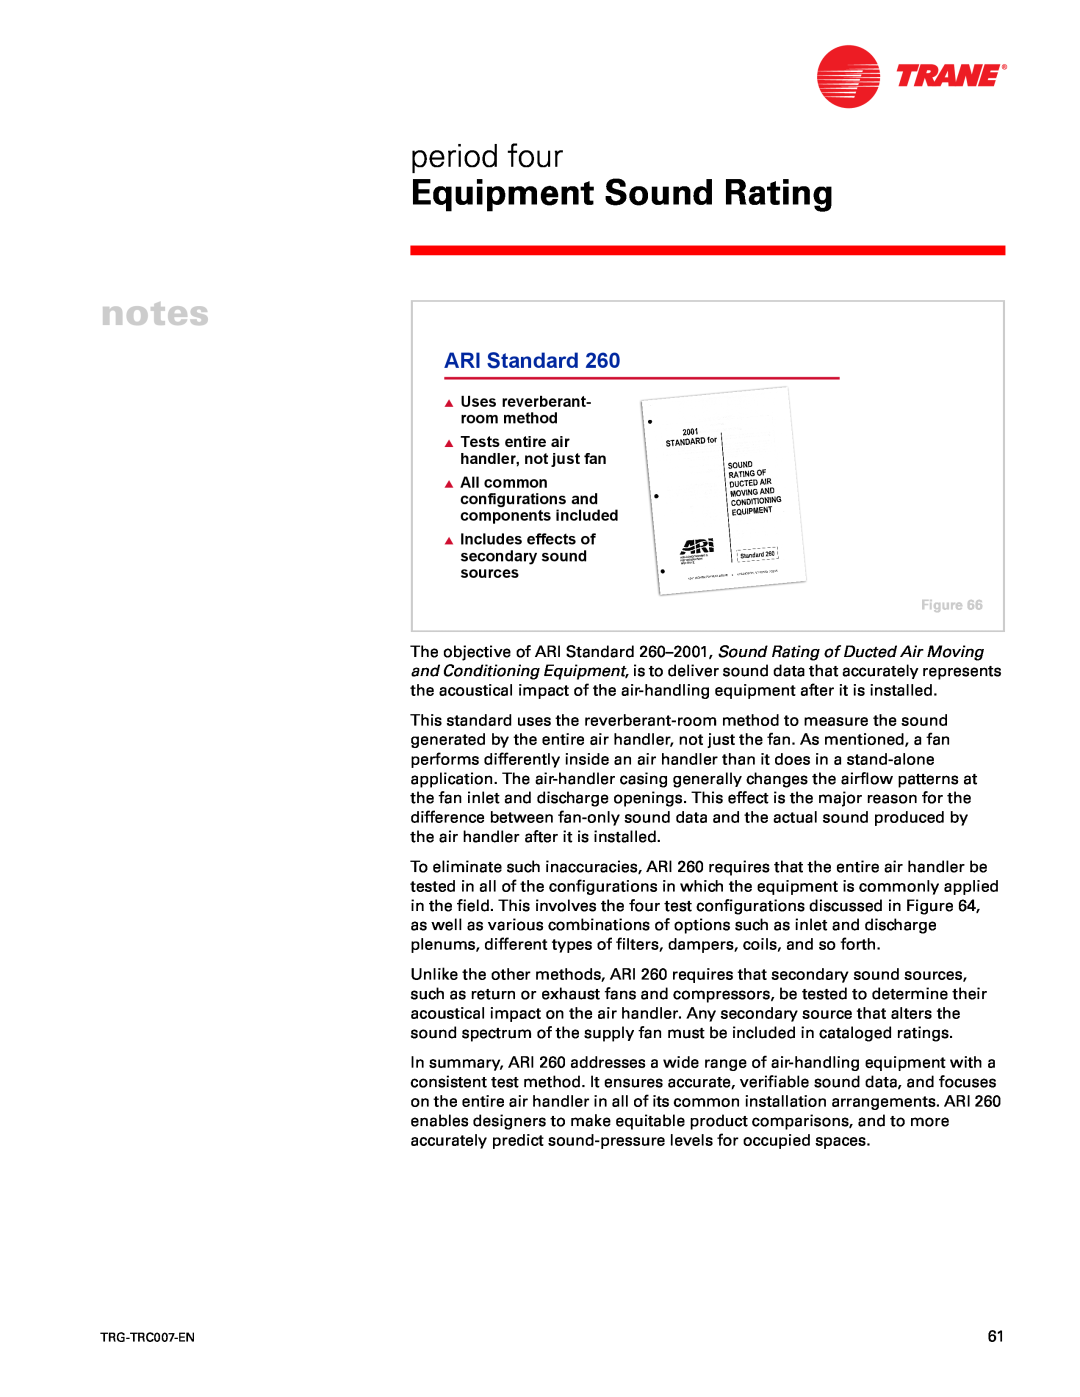 Trane TRG-TRC007-EN manual ARI Standard, Equipment Sound Rating, period four, IUses reverberant- room method 